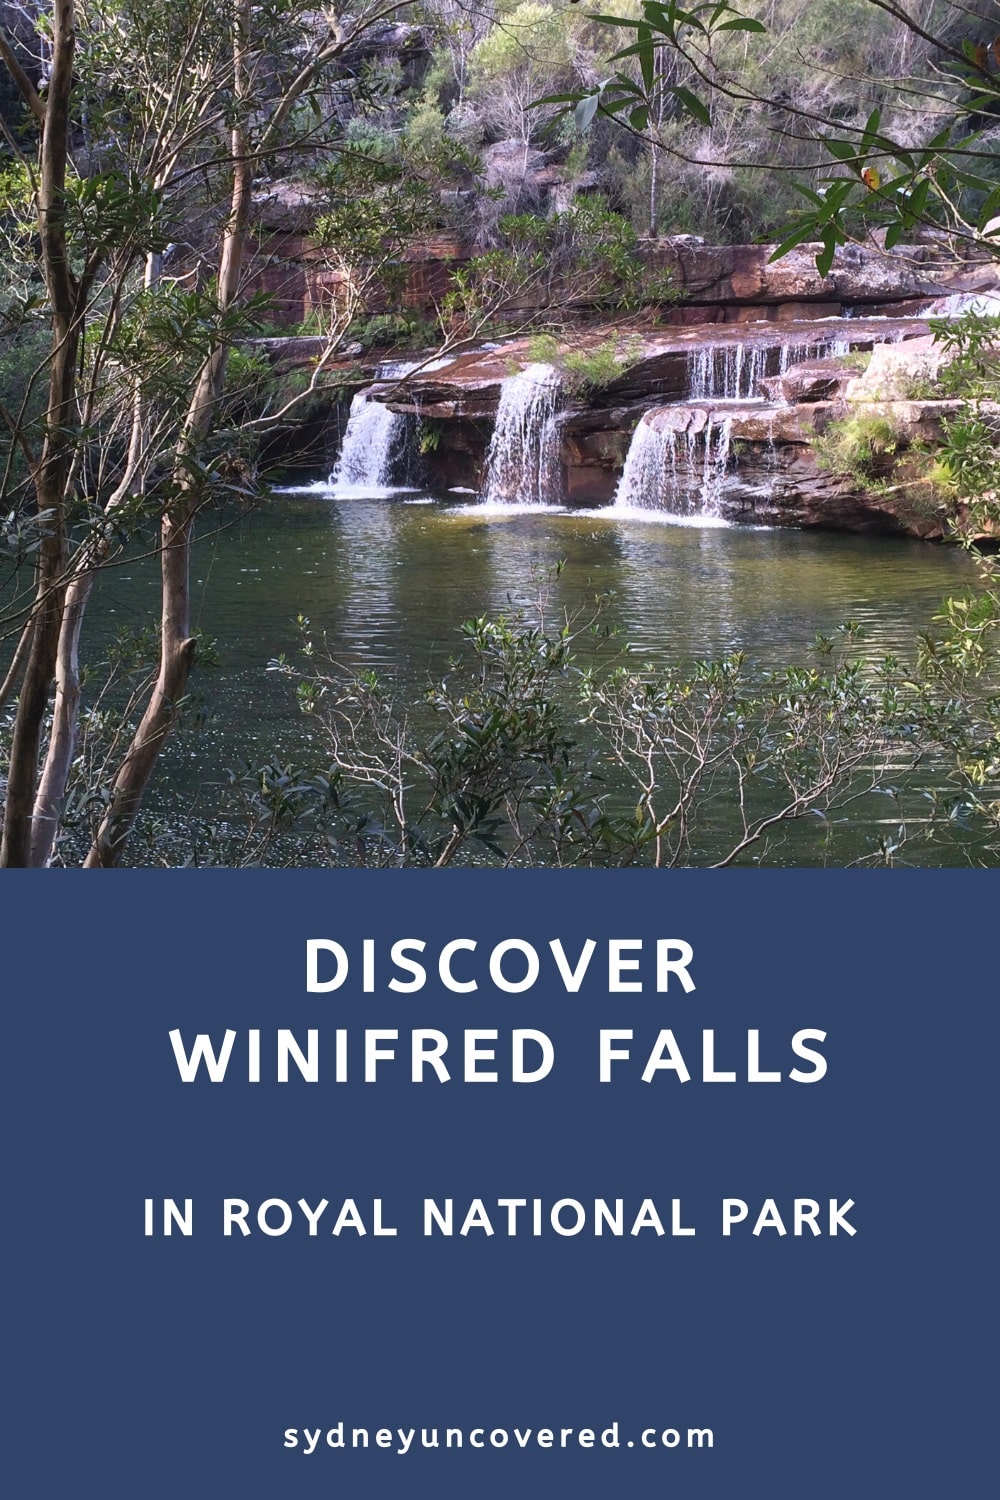 Winifred Falls in Royal National Park